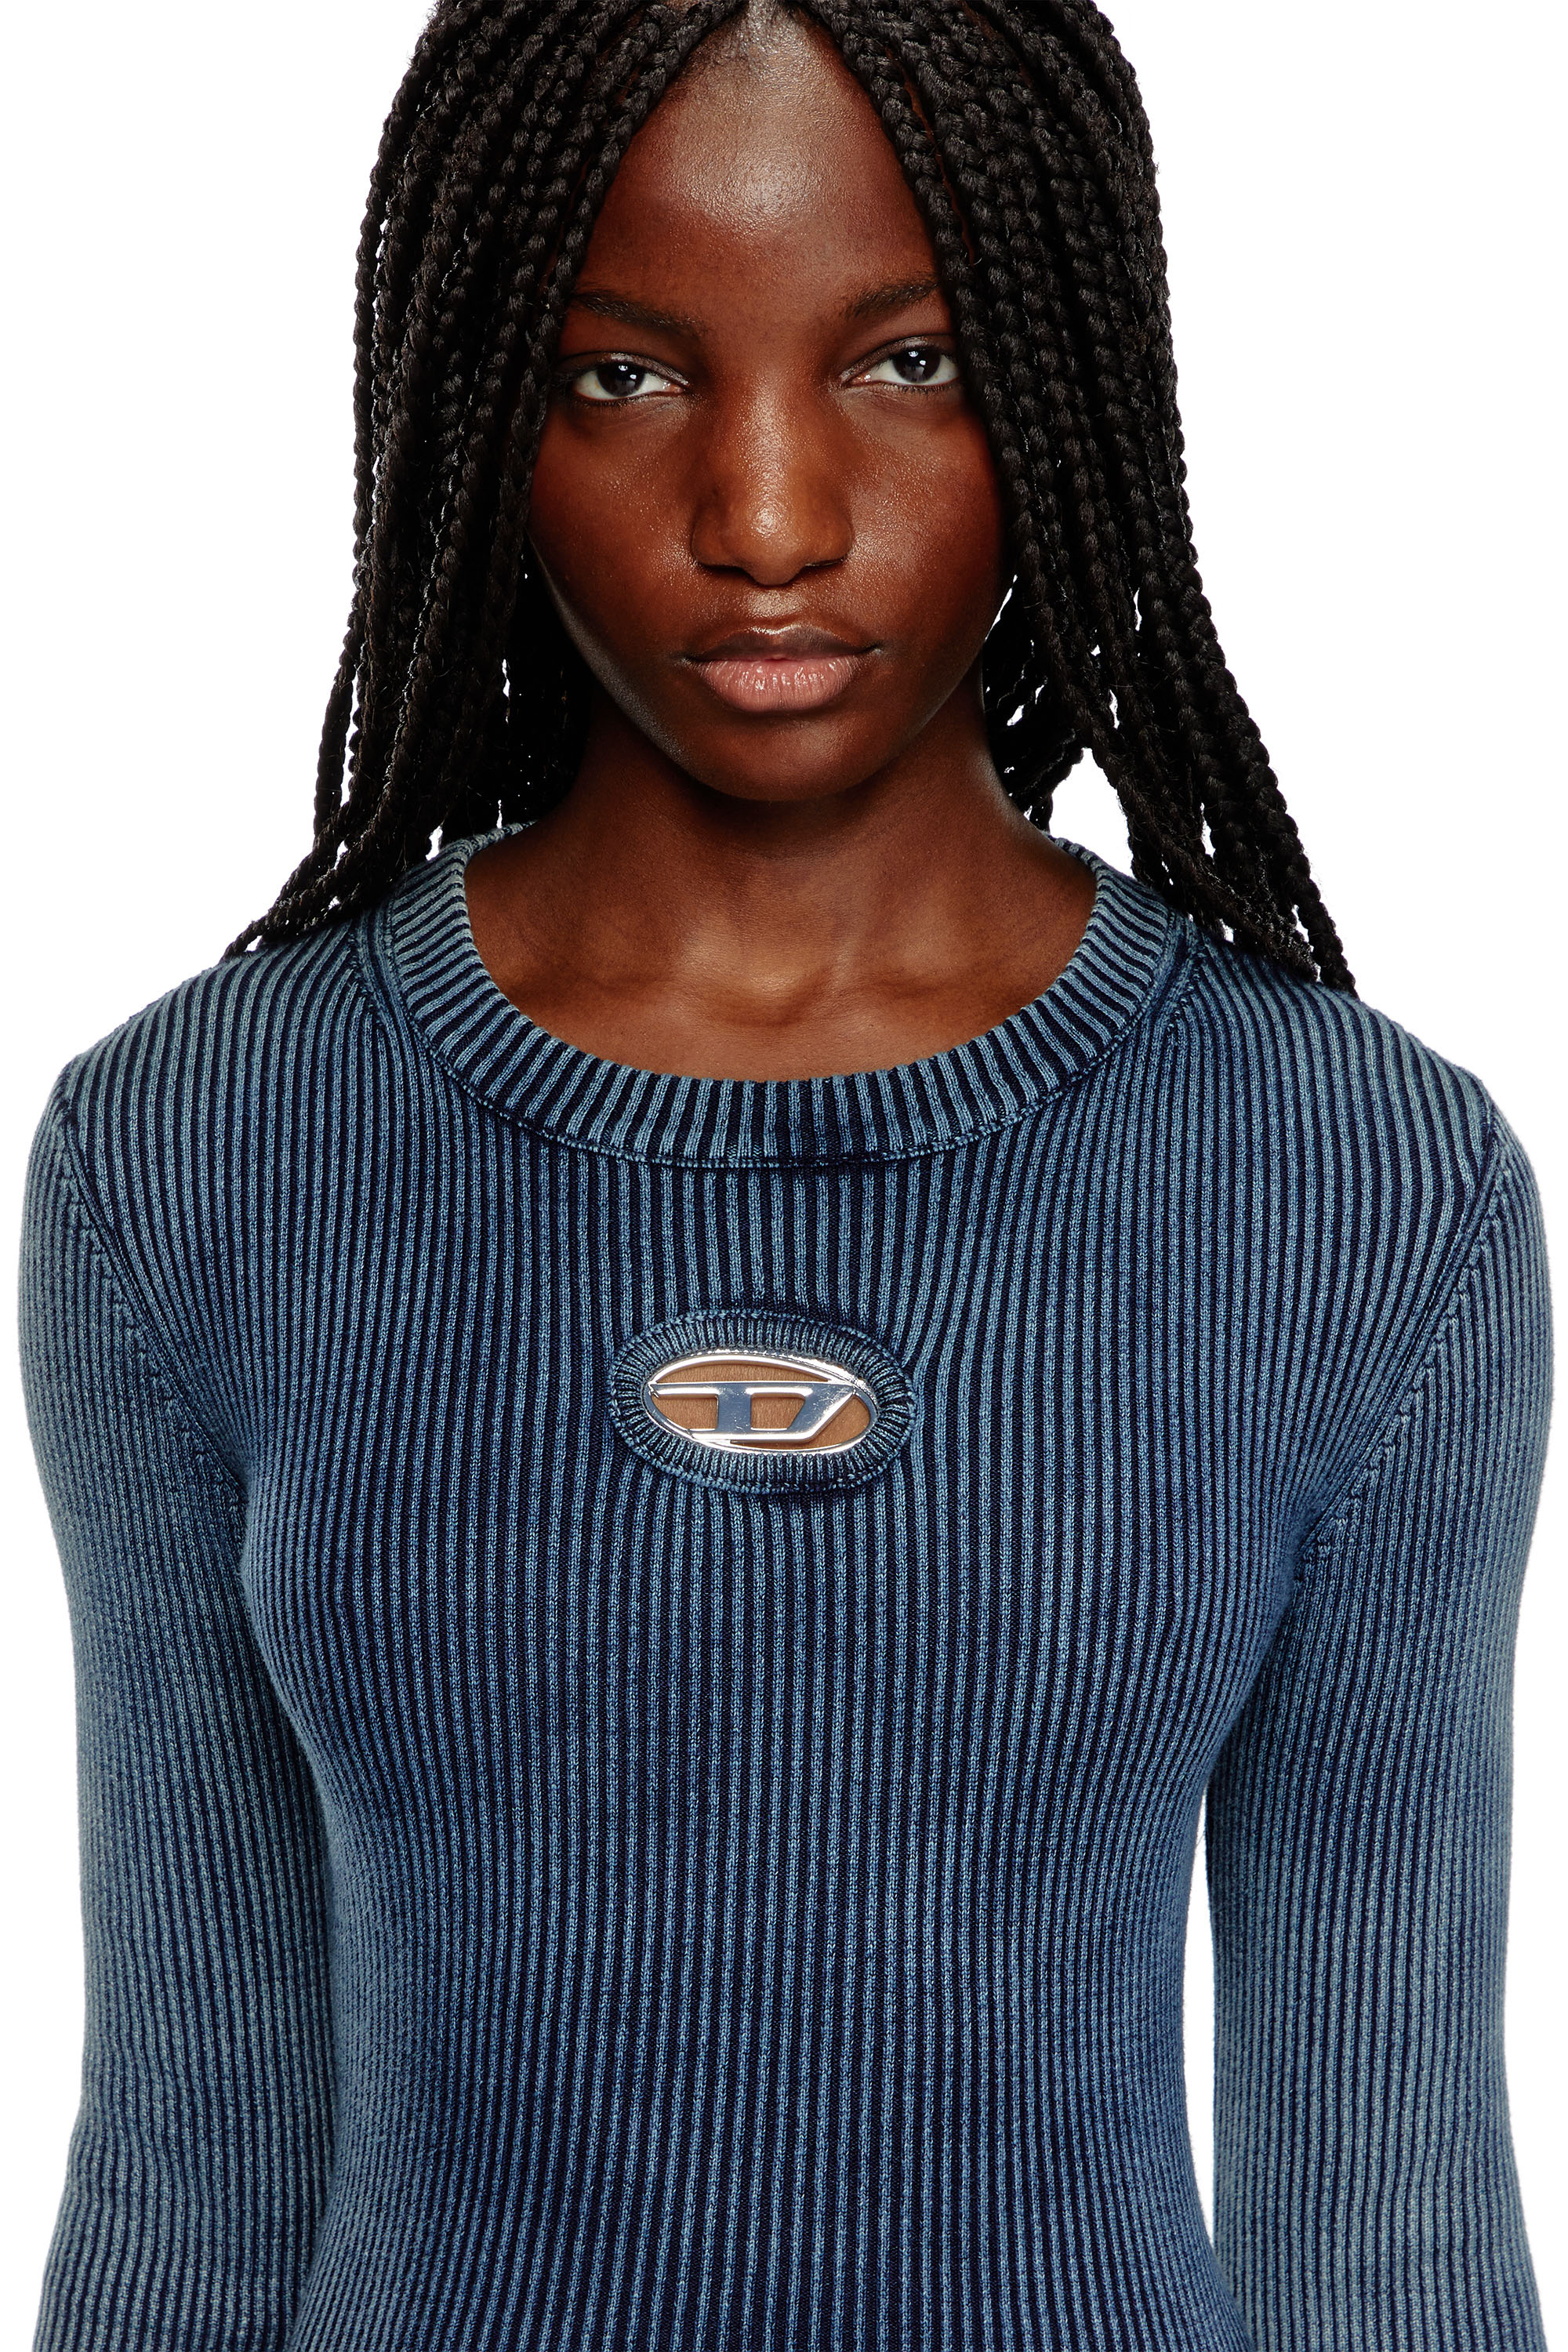 Diesel - M-ANCHOR-A, Mujer Camiseta tejida en canalé con Oval D in Azul marino - Image 5